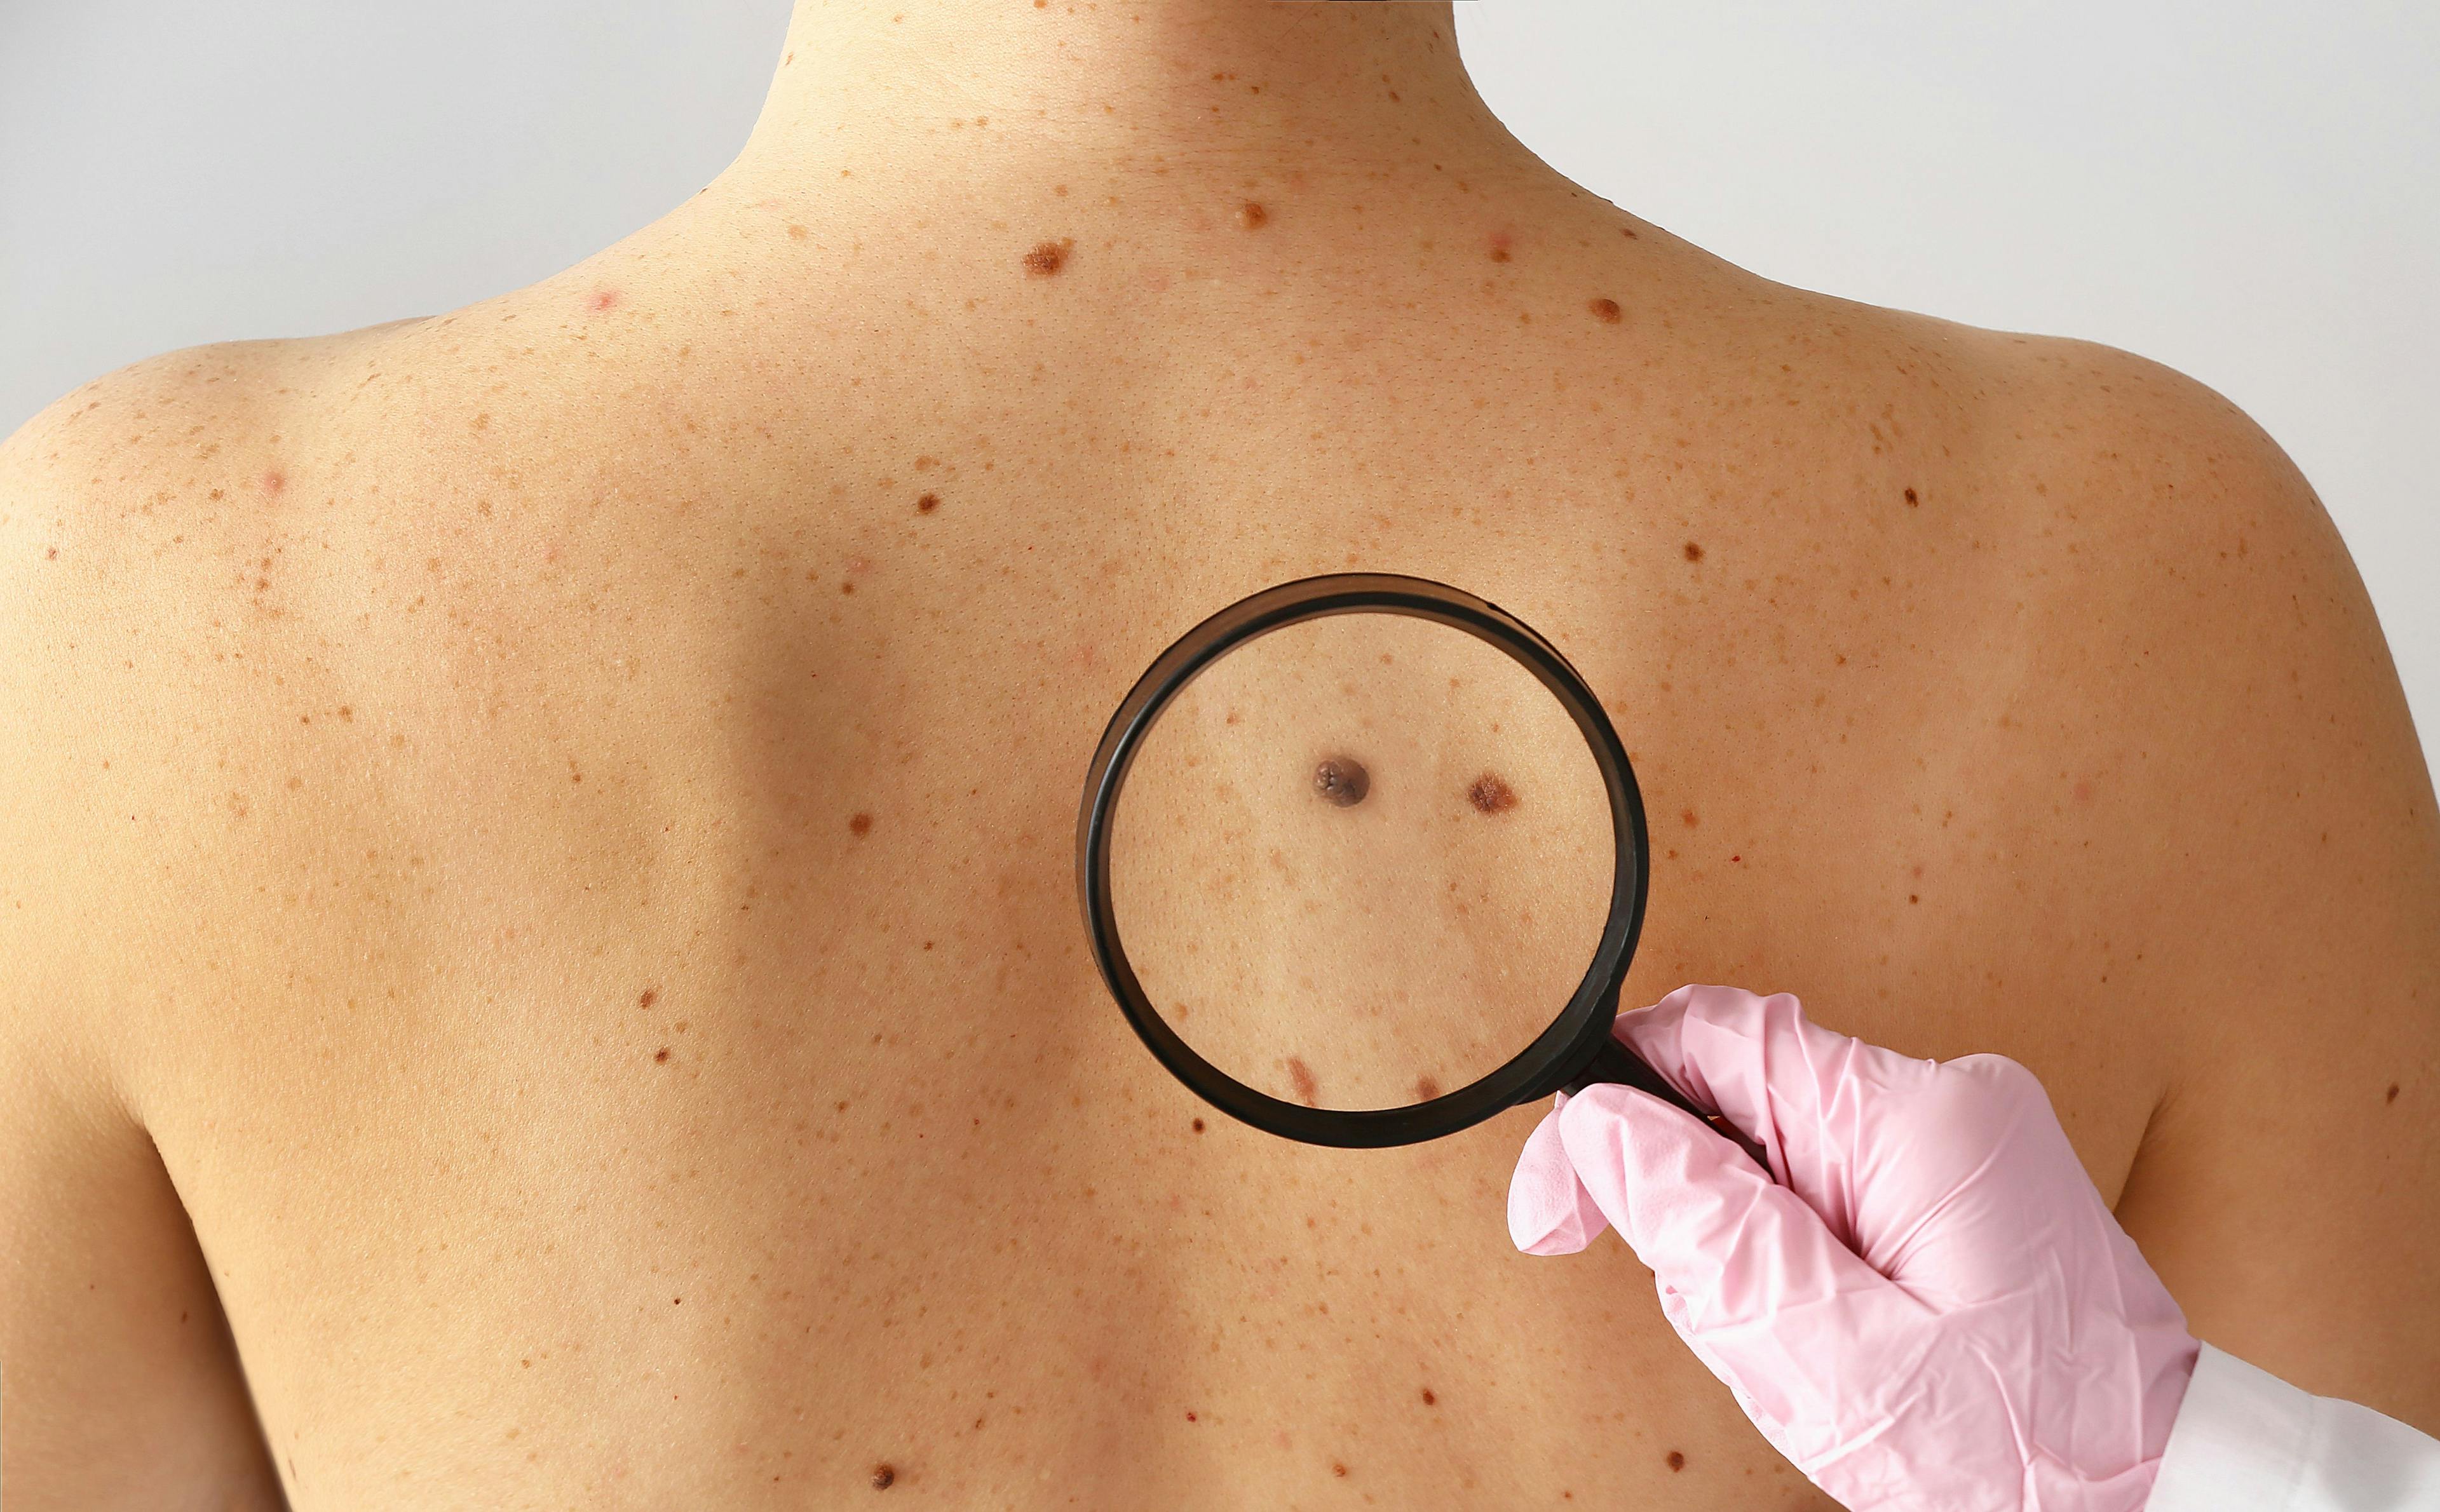 Skin Cancer Examination Concept | image credit: Pixel-Shot - stock.adobe.com